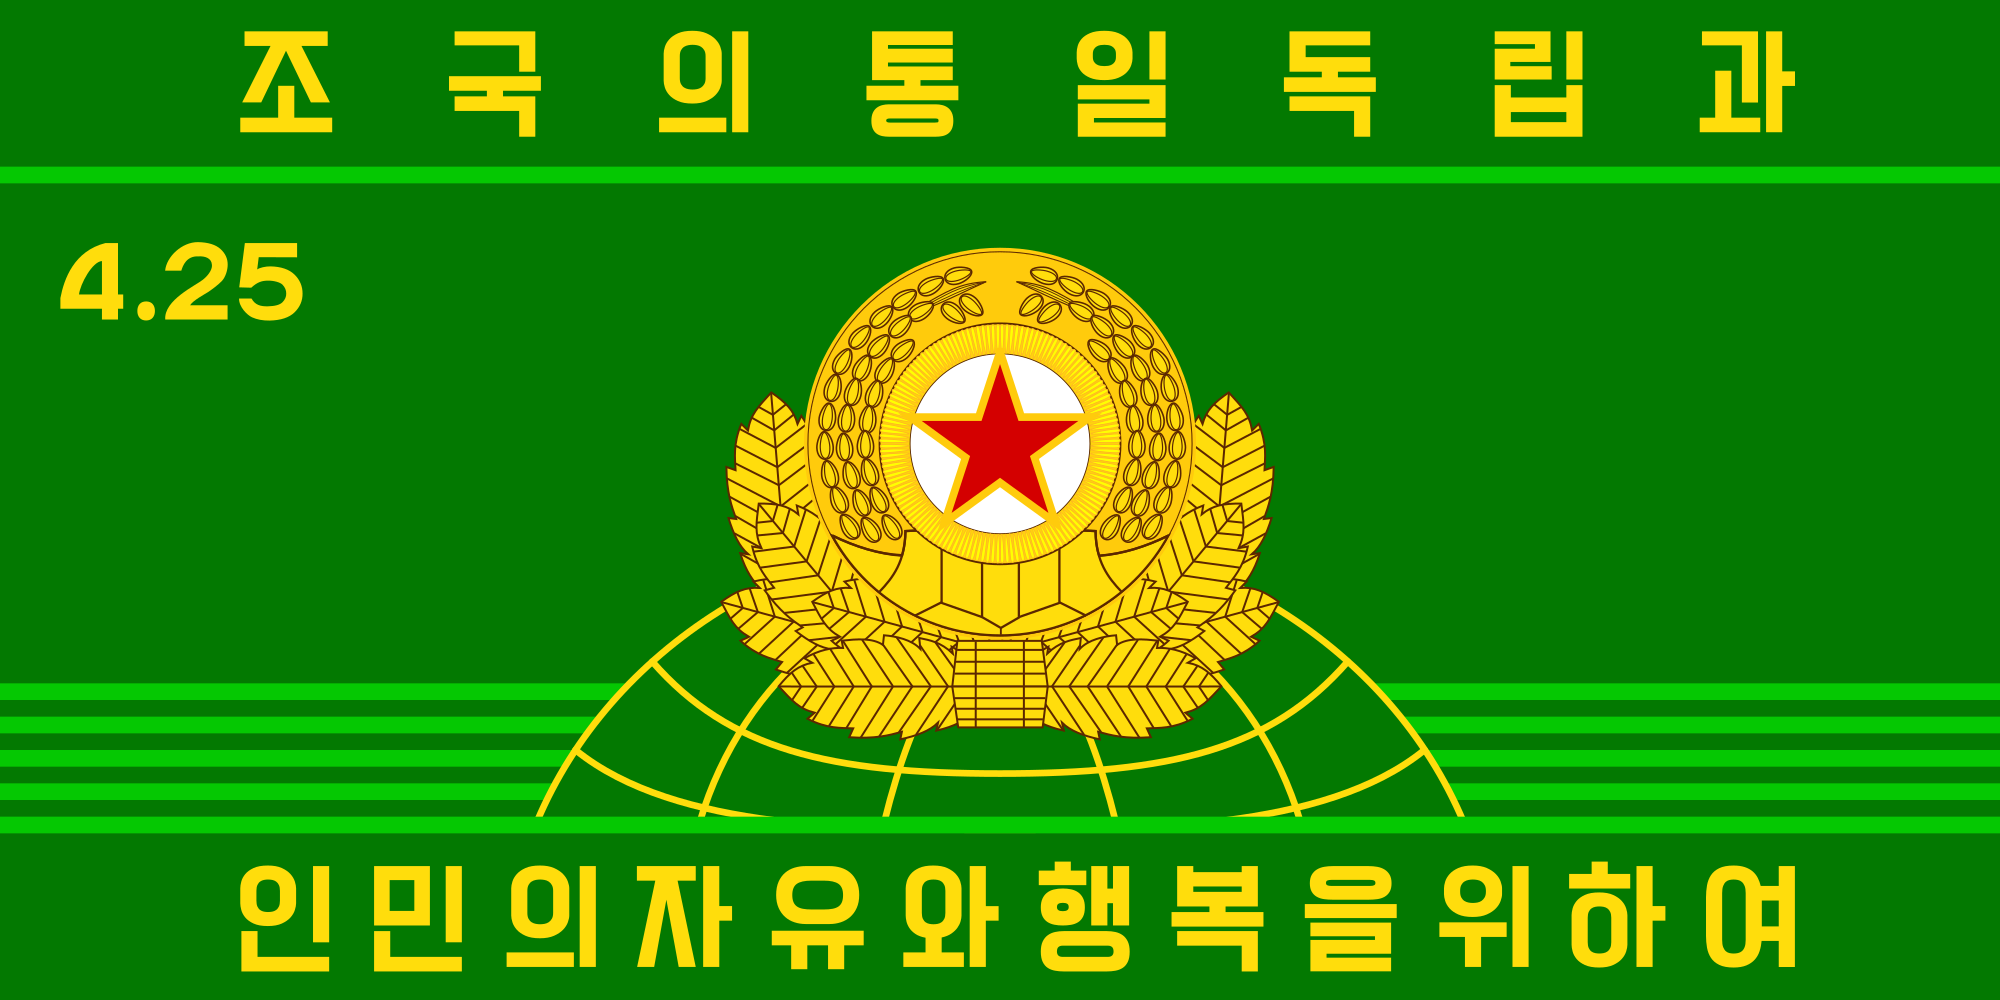 General 2000x1000 North Korea flag military communism Korean characters